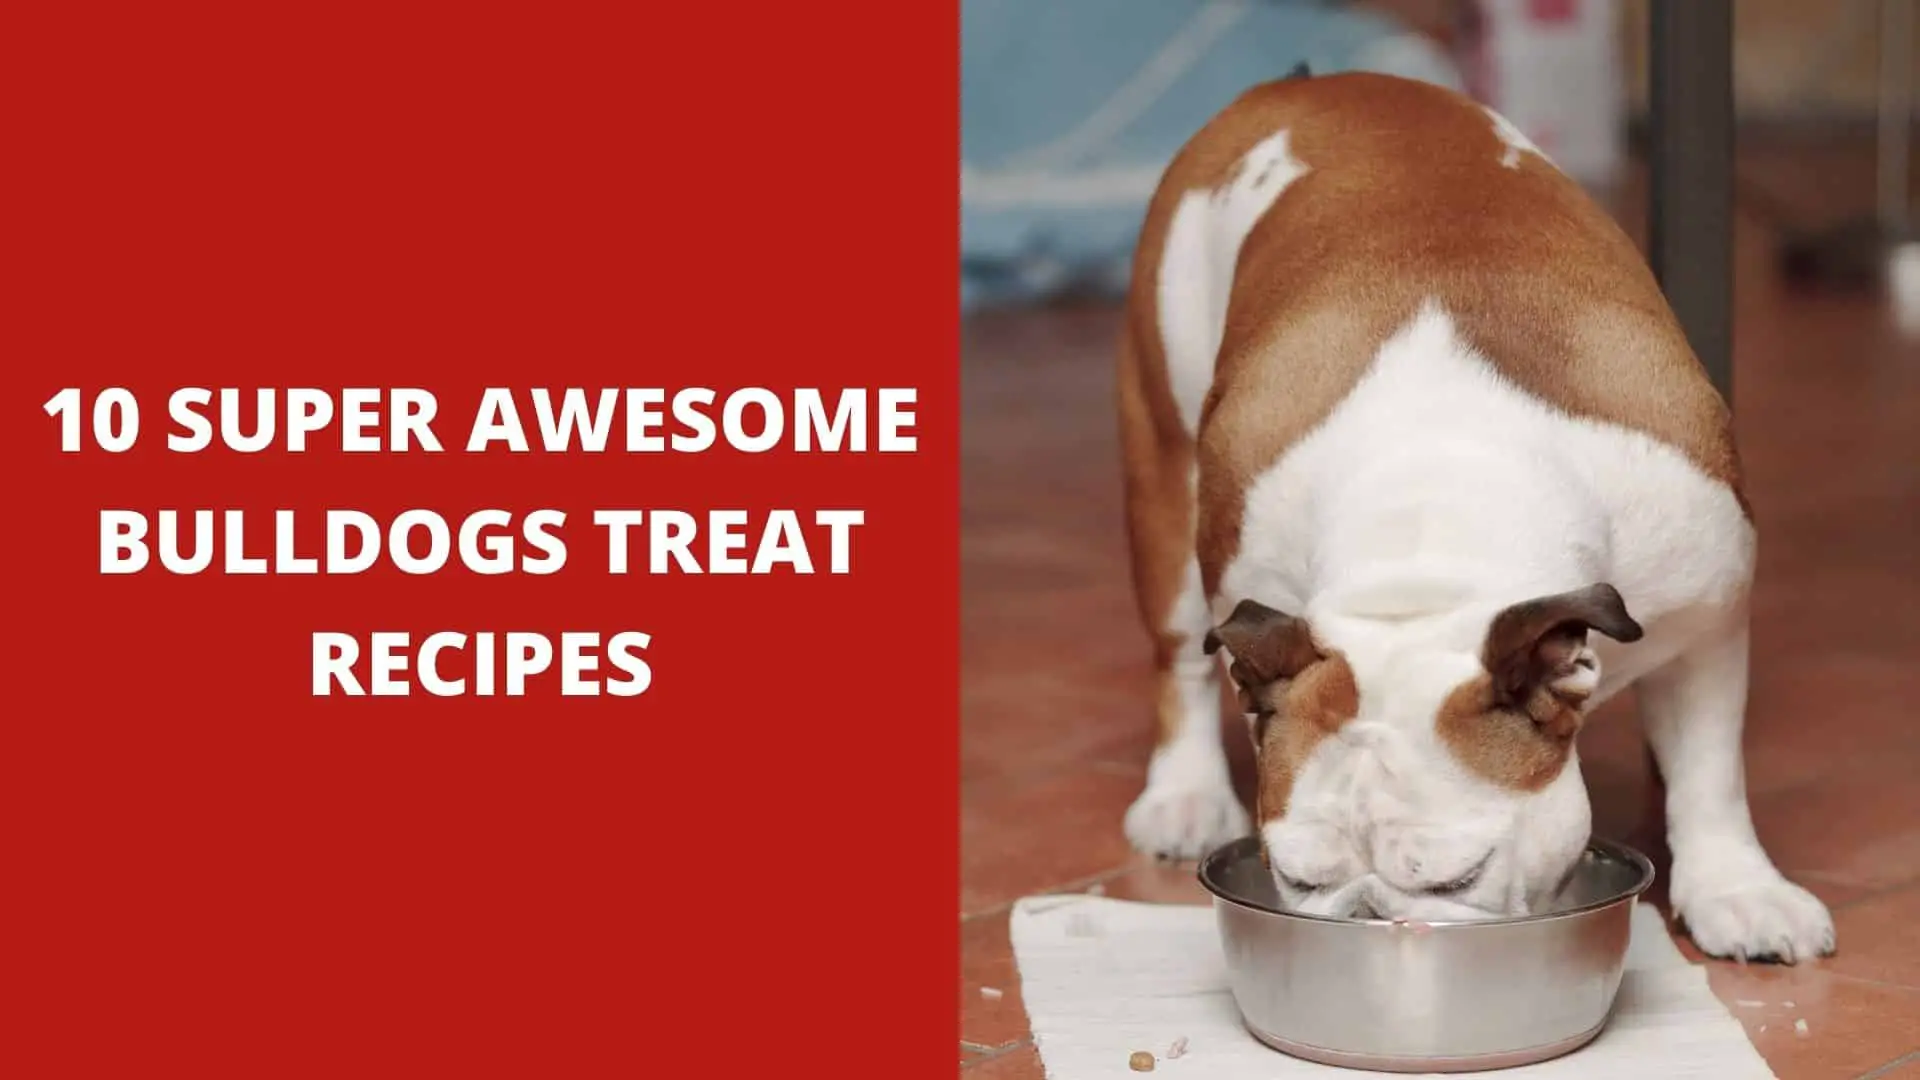 10 Super Awesome Bulldogs Treat Recipes